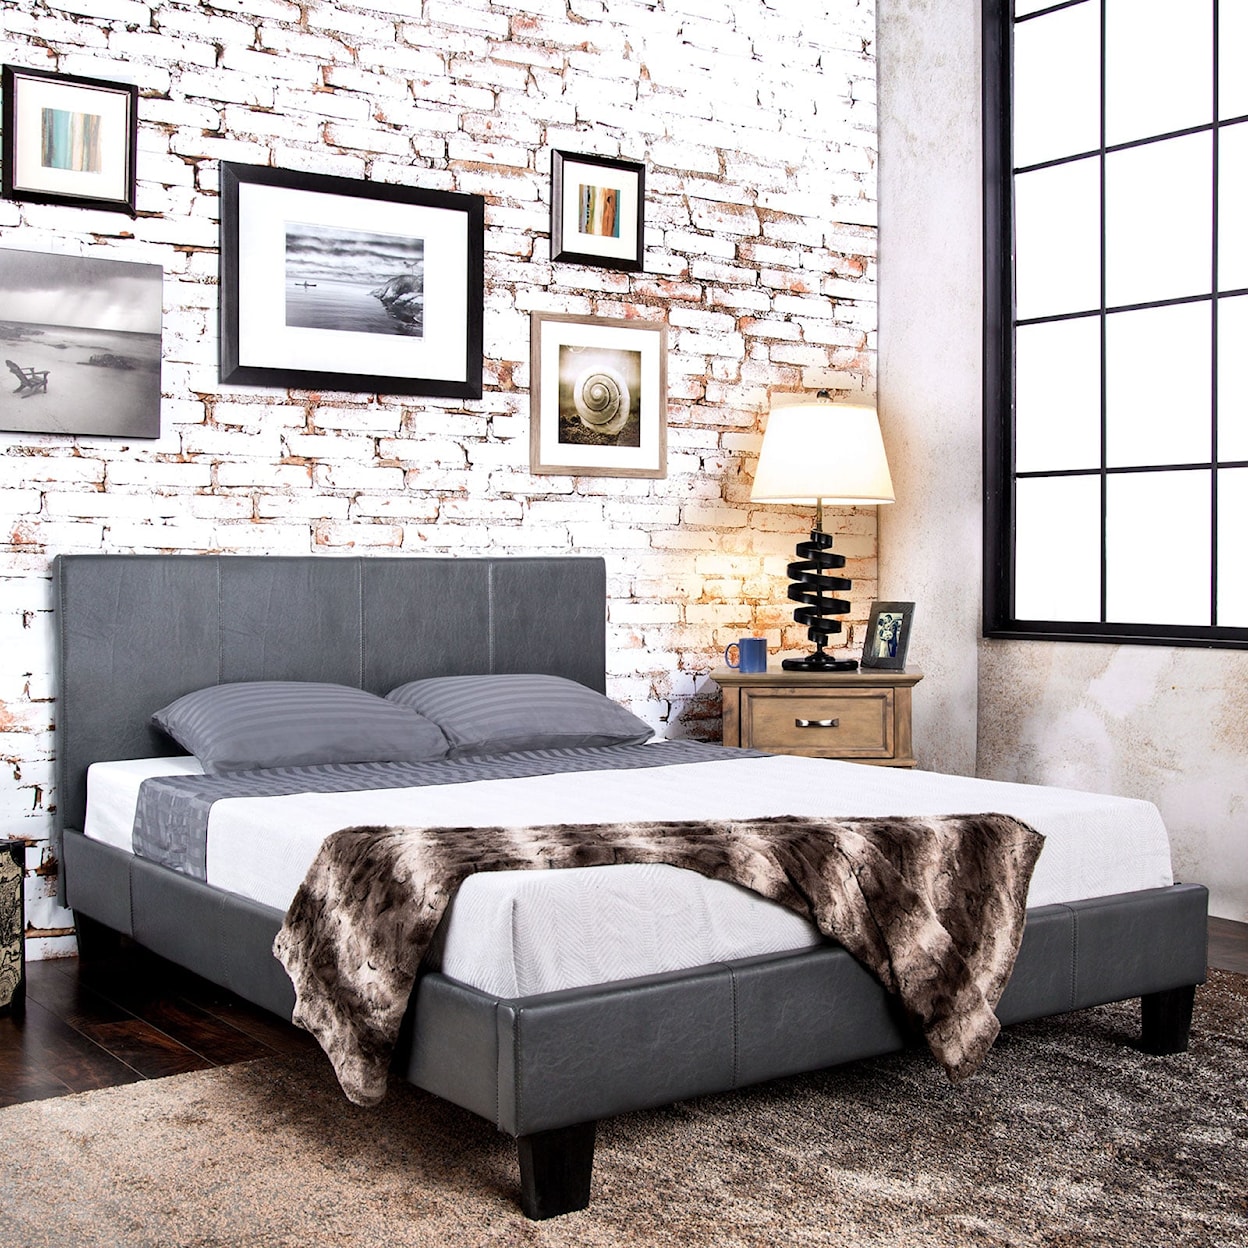 Furniture of America Winn Park King Bed